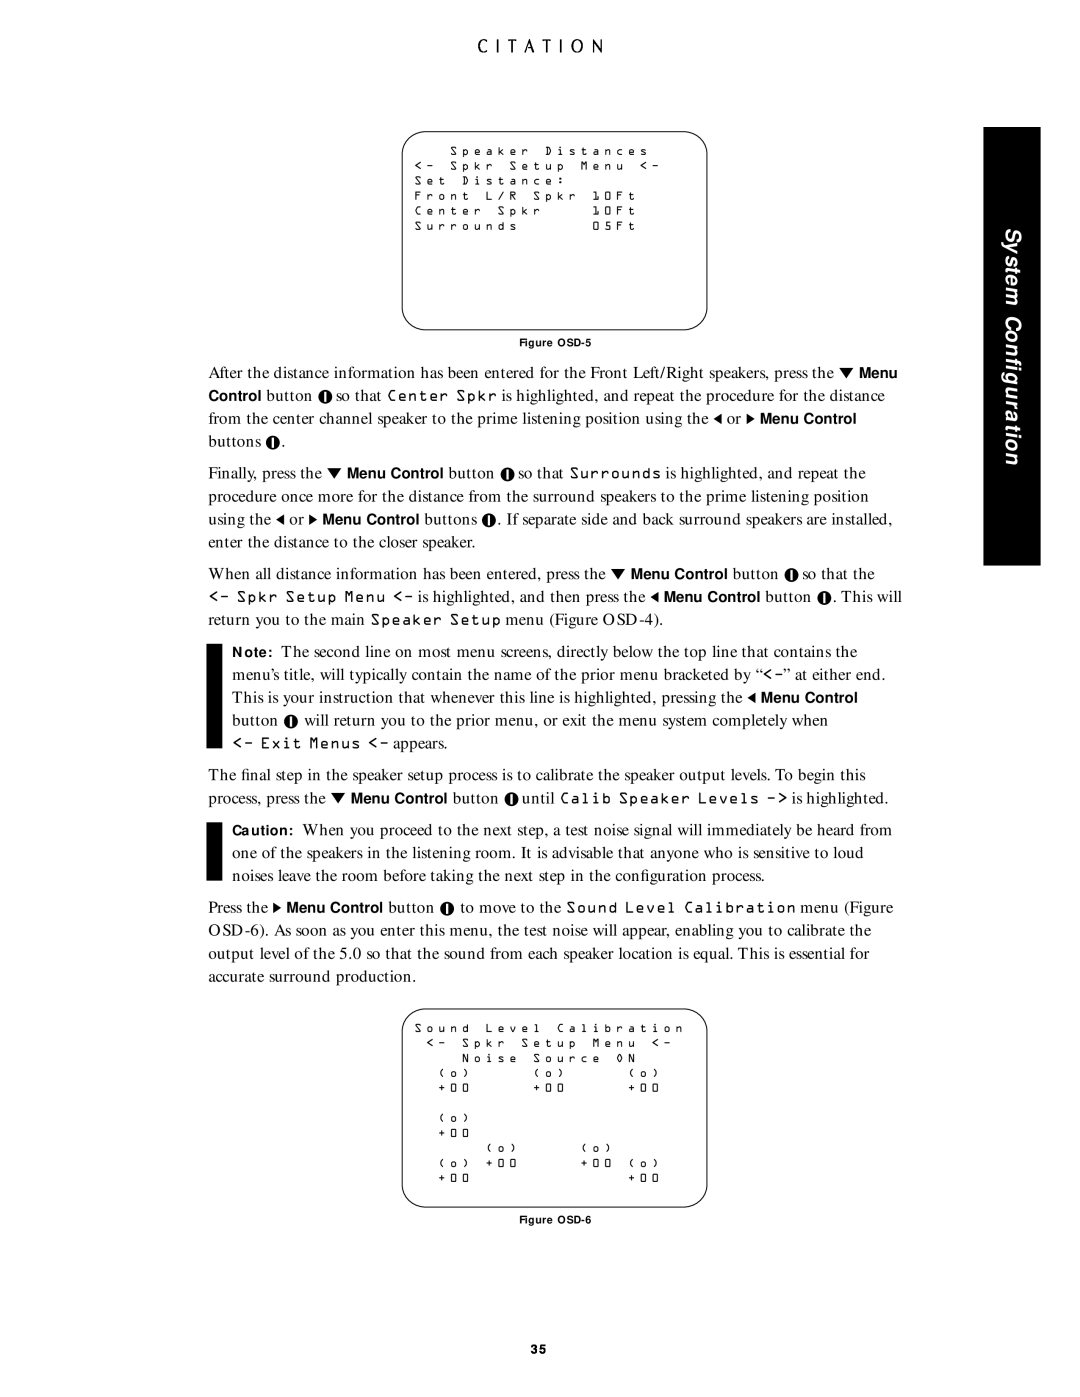 Citation Stereo Receiver owner manual System Conﬁguration, <Ð Exit Menus <Ð appears, Figure OSD-5, Figure OSD-6 